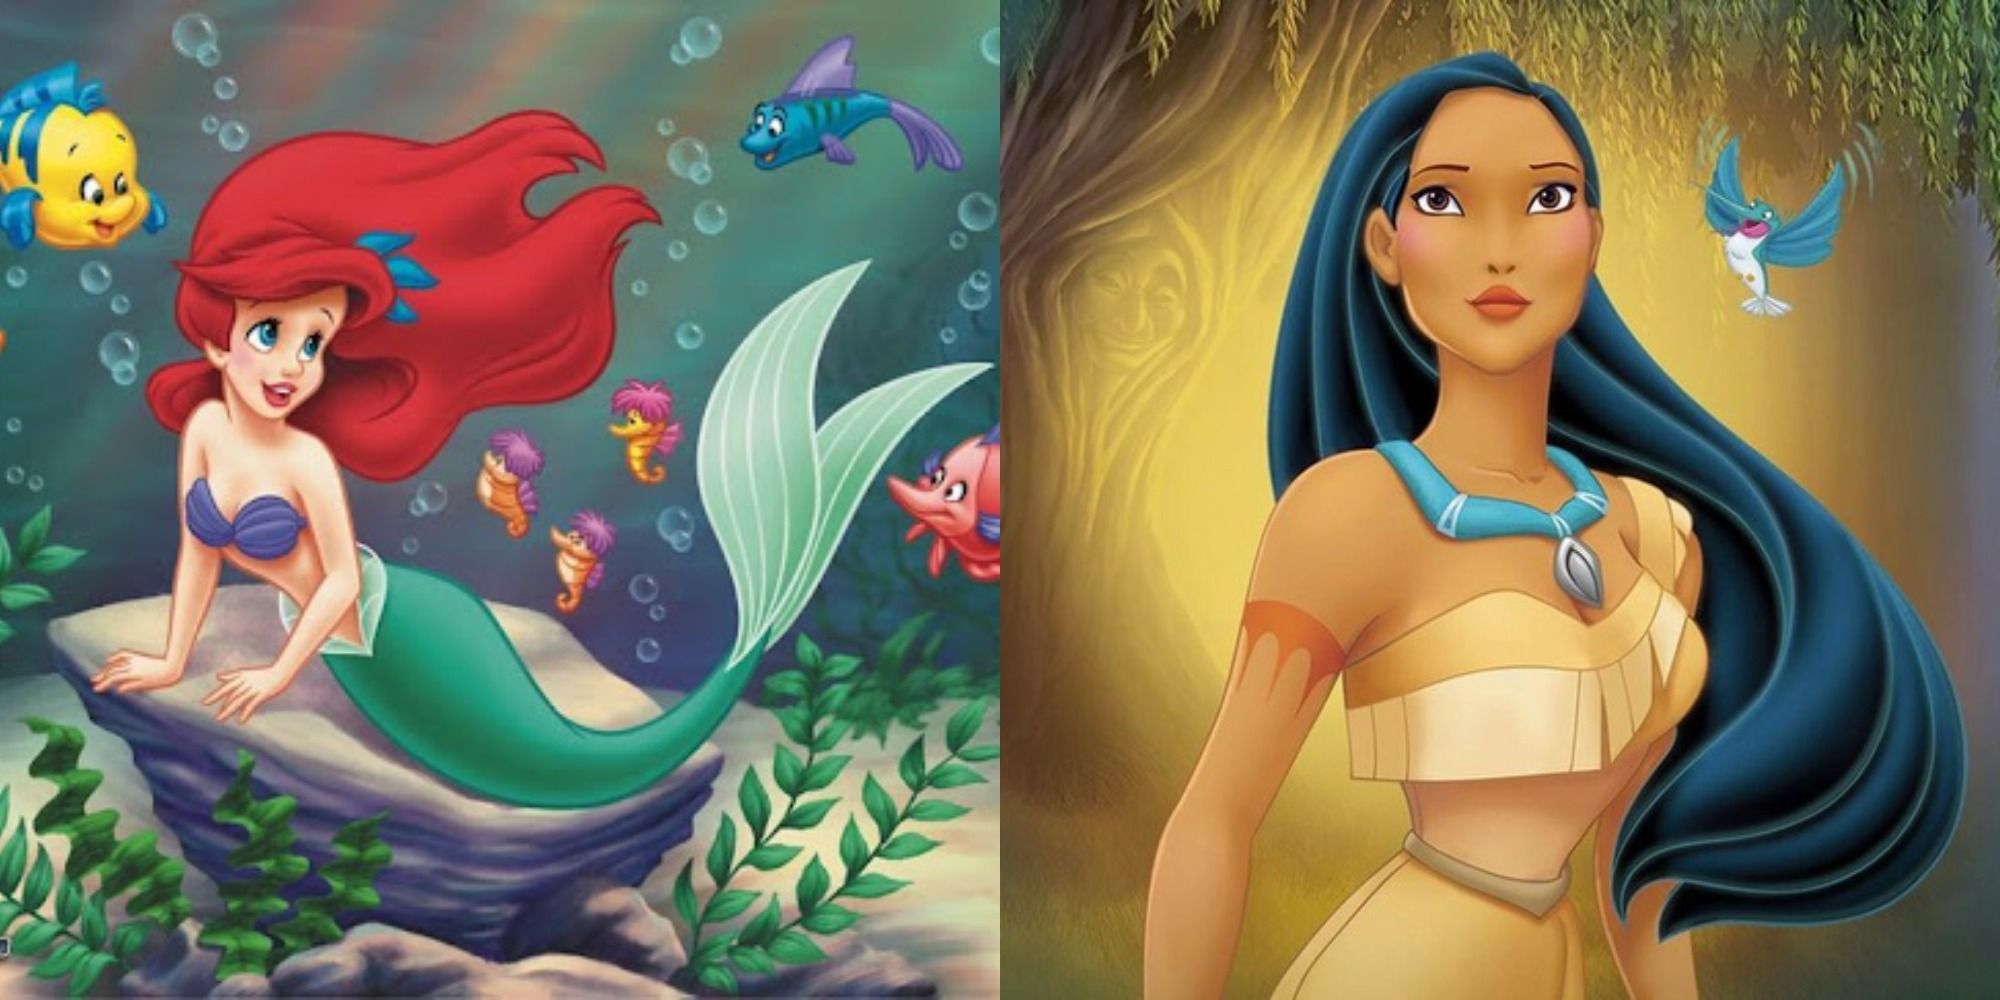 Split image showing Ariel and Pocahontas